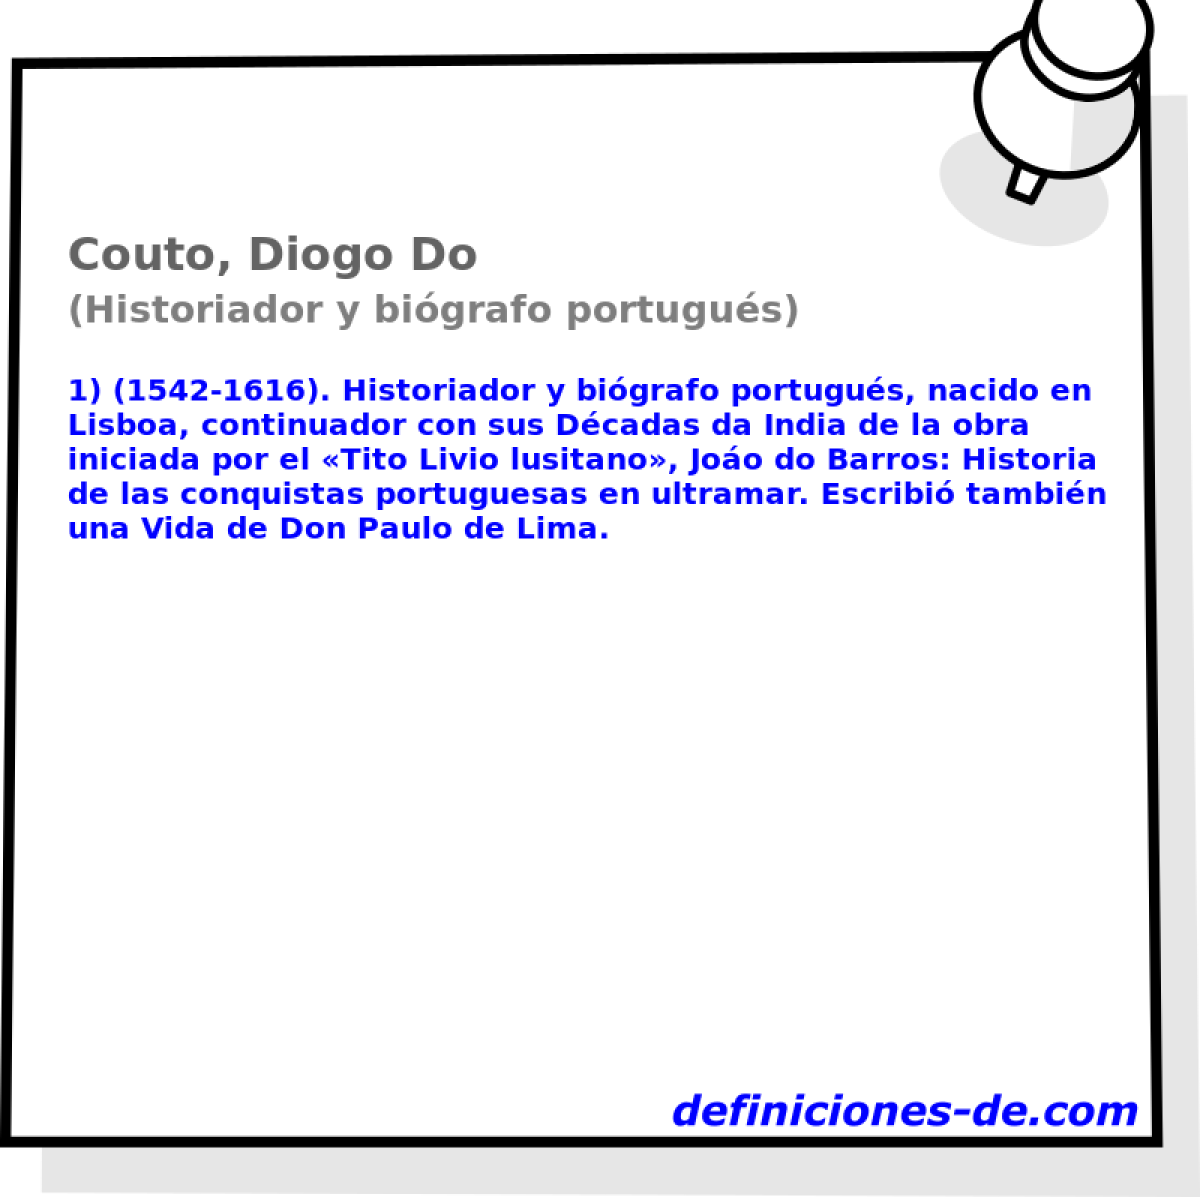 Couto, Diogo Do (Historiador y bigrafo portugus)